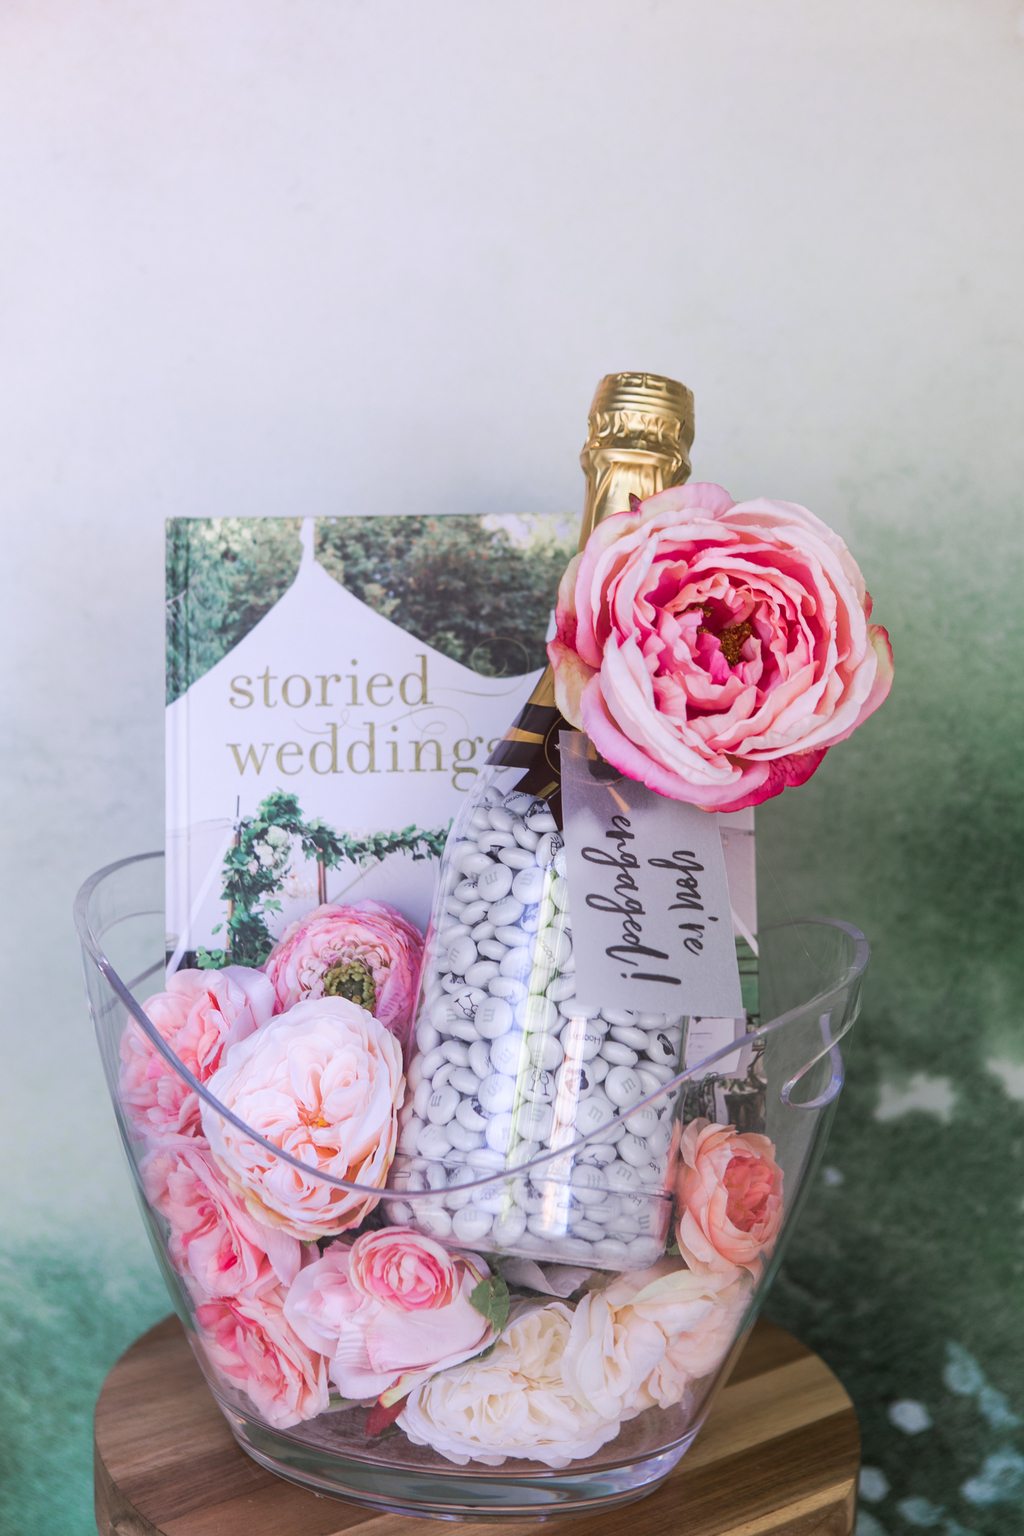 DIY Glamorous Bridal Shower Or Wedding Favors With M&M's - Weddingomania